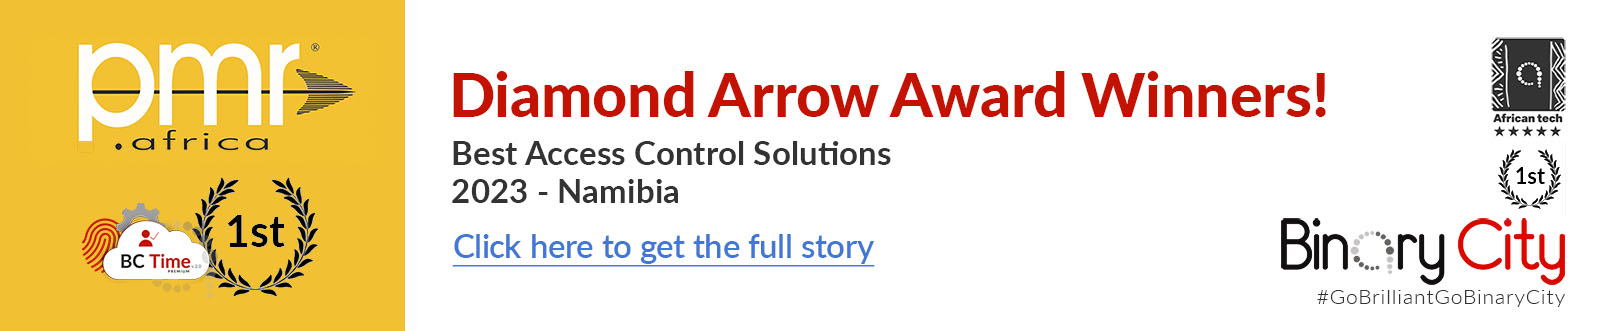 PMR africa award winner best access control